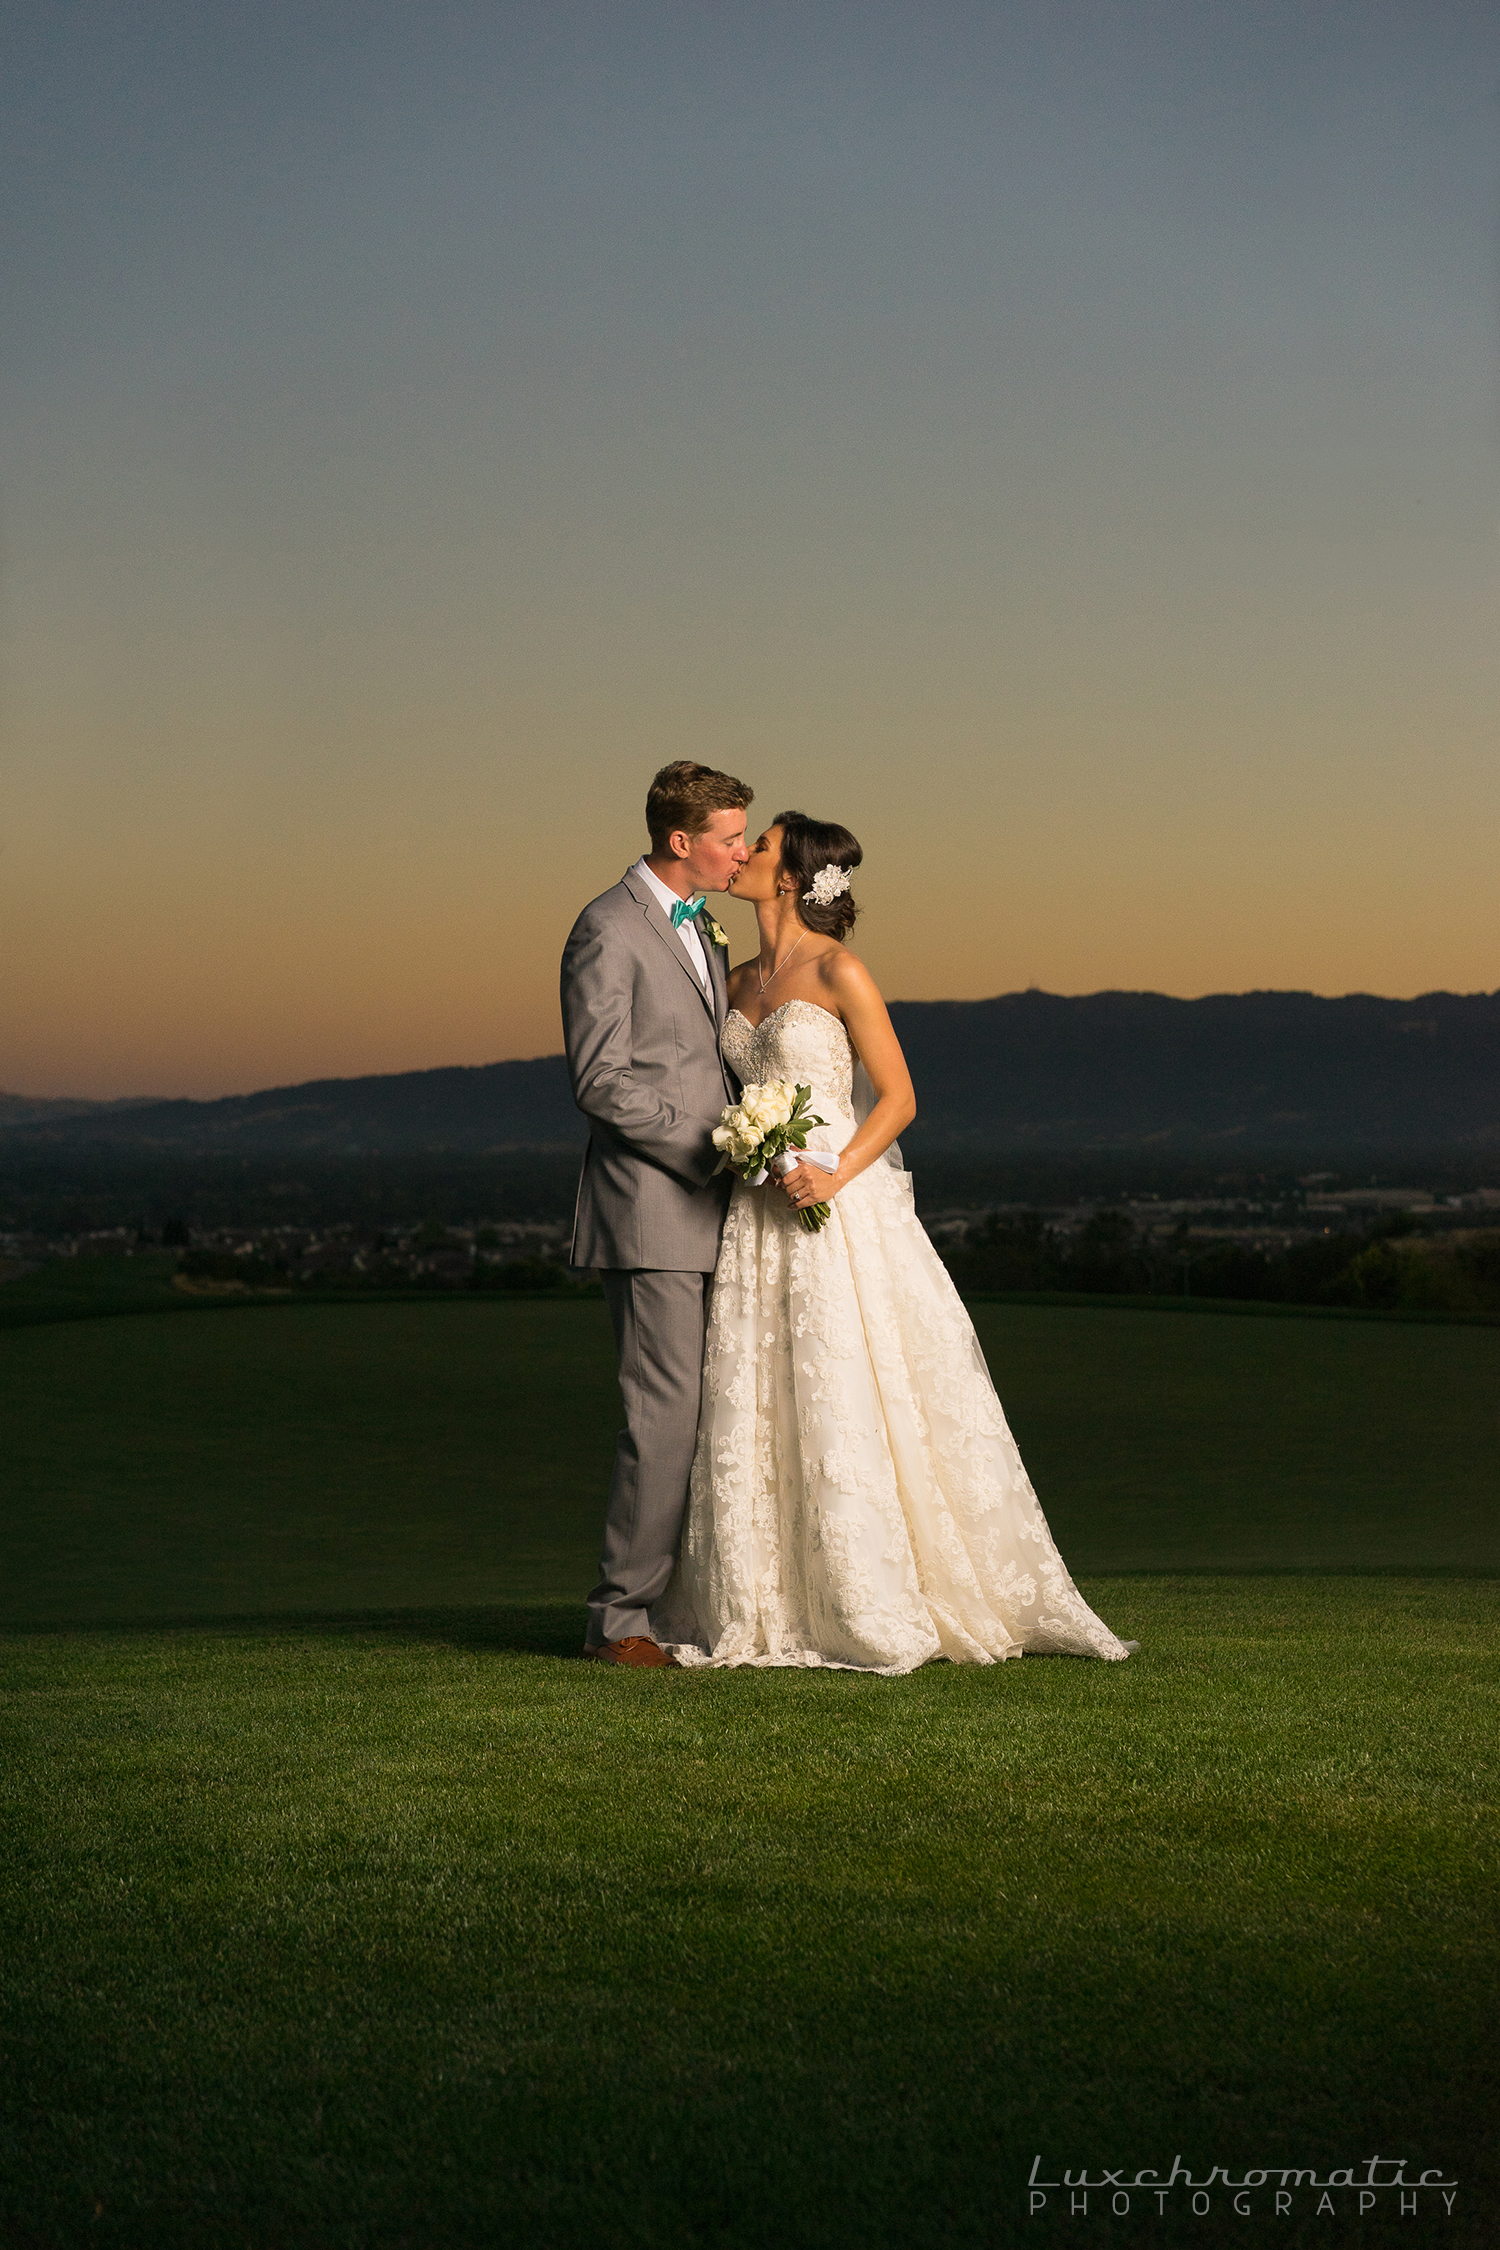 061717_Jessica_Chris-3034-luxchromatic-wedding-bride-groom-brides-sonyalpha-sonyimages-sony-sonyphotography-sanfrancisco-sf-bayarea-weddingphotography-photographer-profoto-interfit-strobe-light-speedlite-dublin-ranch-golf-course-ca-california.jpg